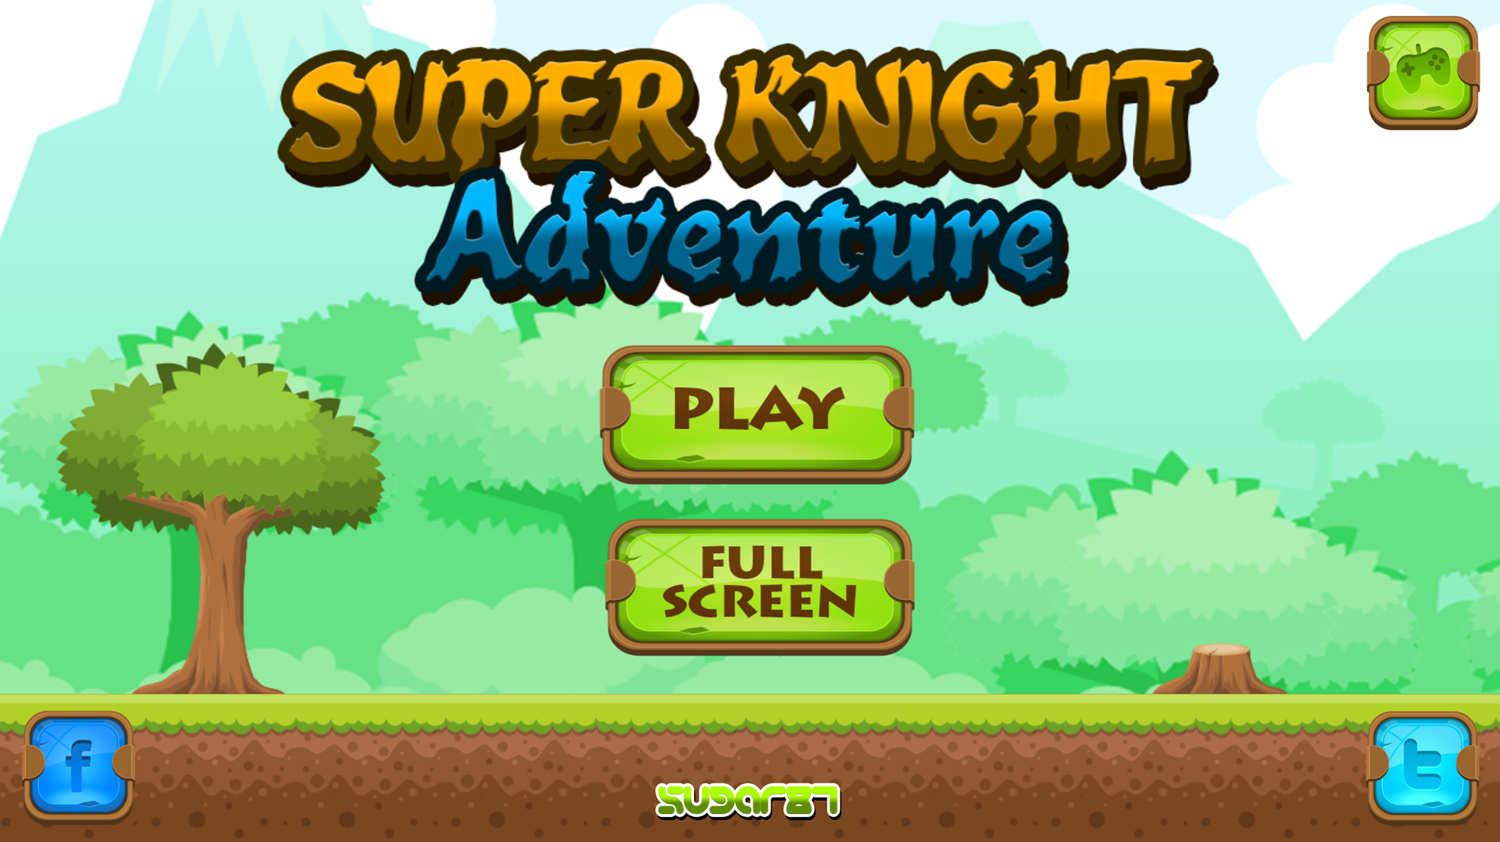 Super Knight Adventure Welcome Screen Screenshot.